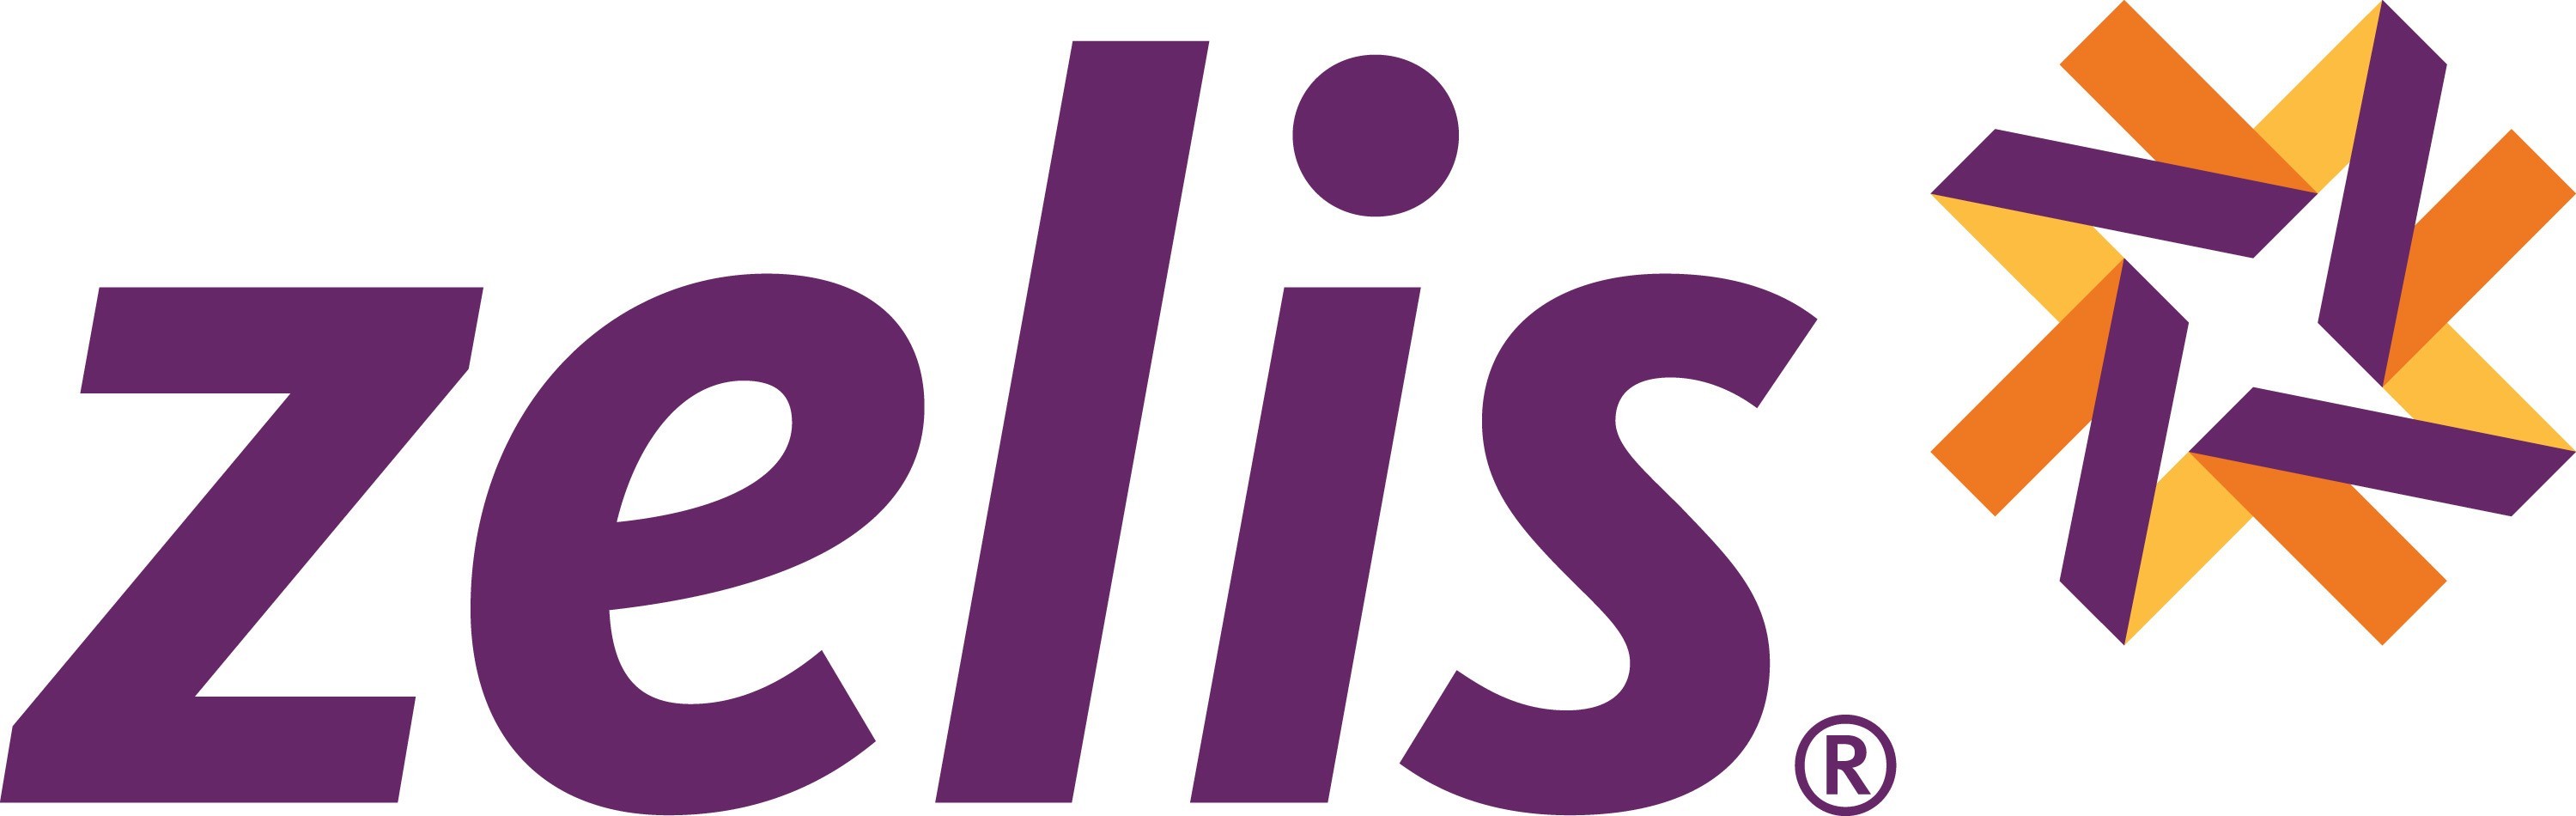 Zelis_Registered_Mark_Logo